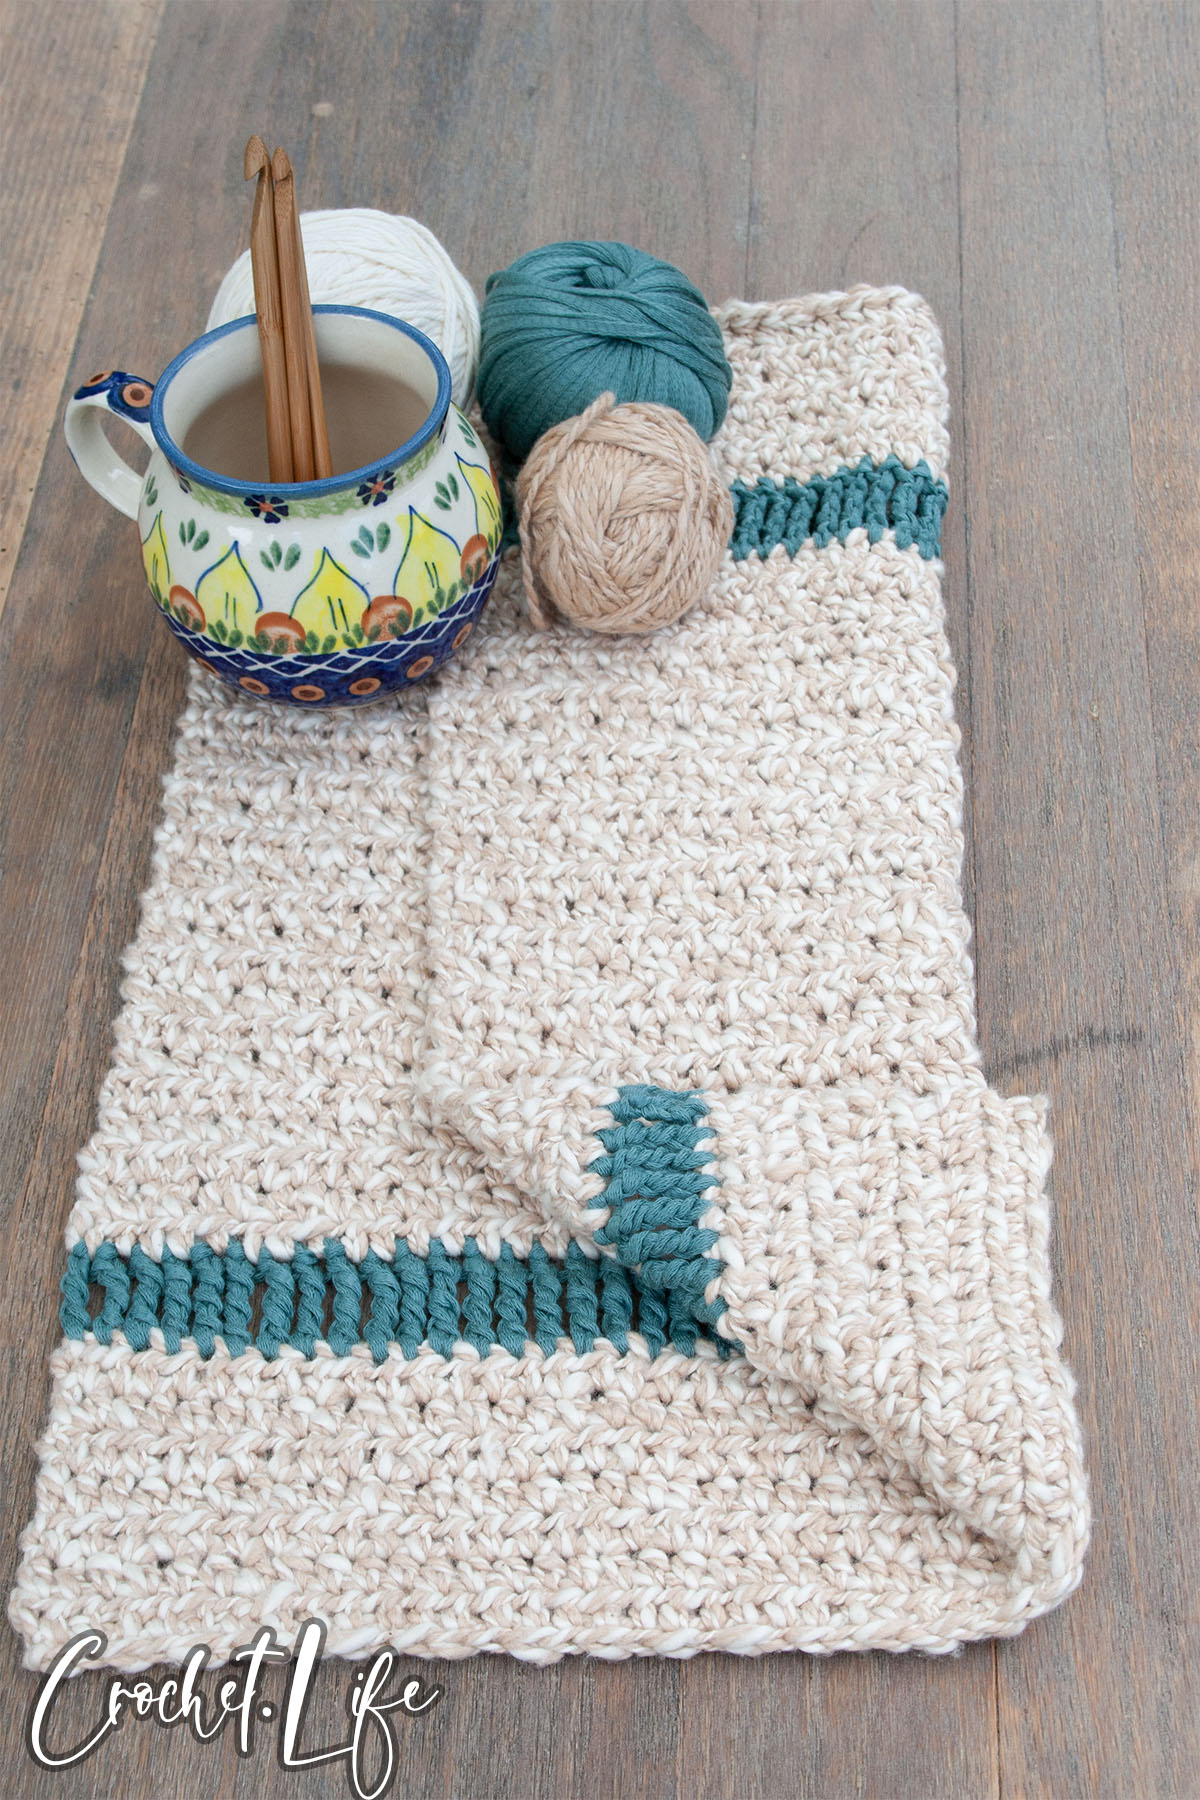 pathways dish cloth crochet pattern